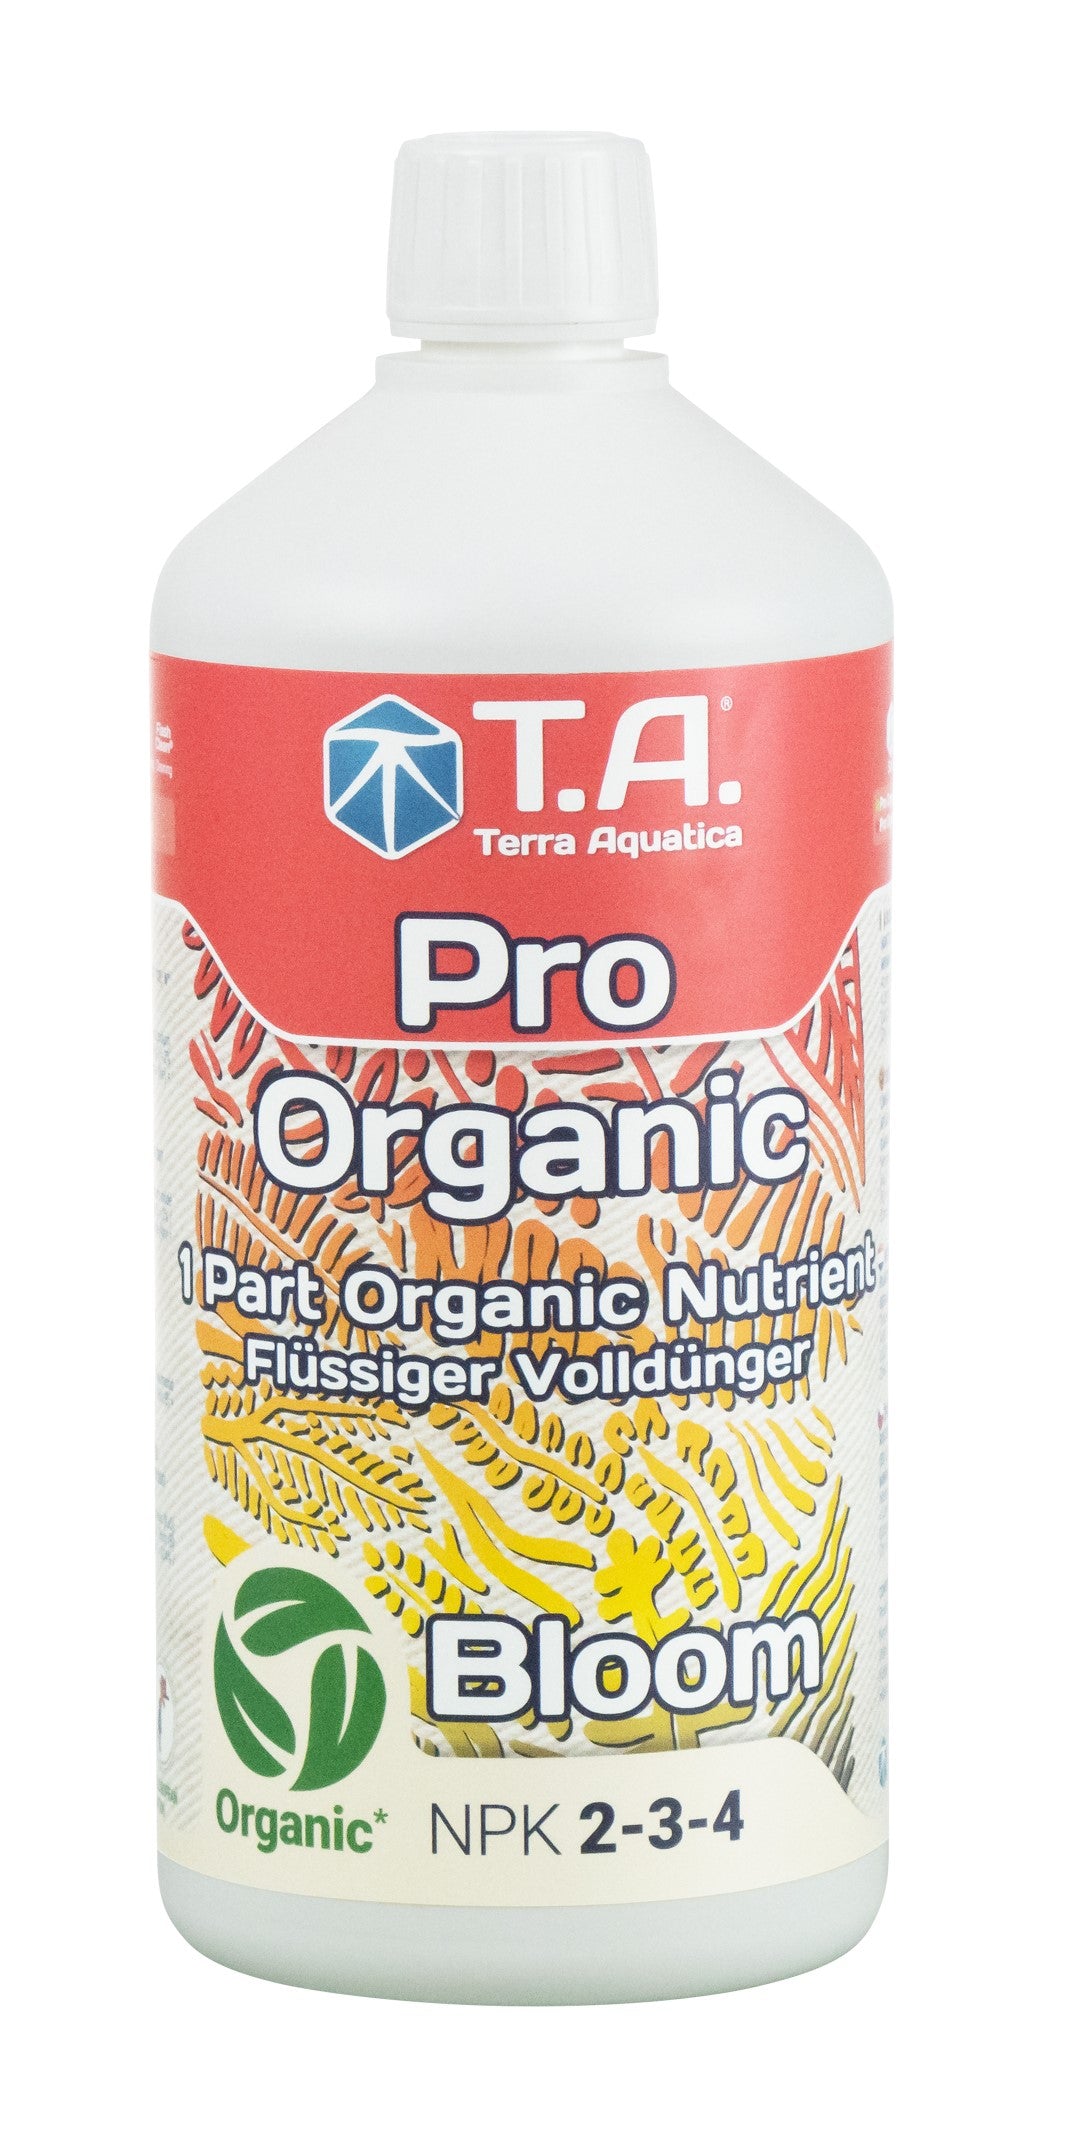 Pro Organic Duo